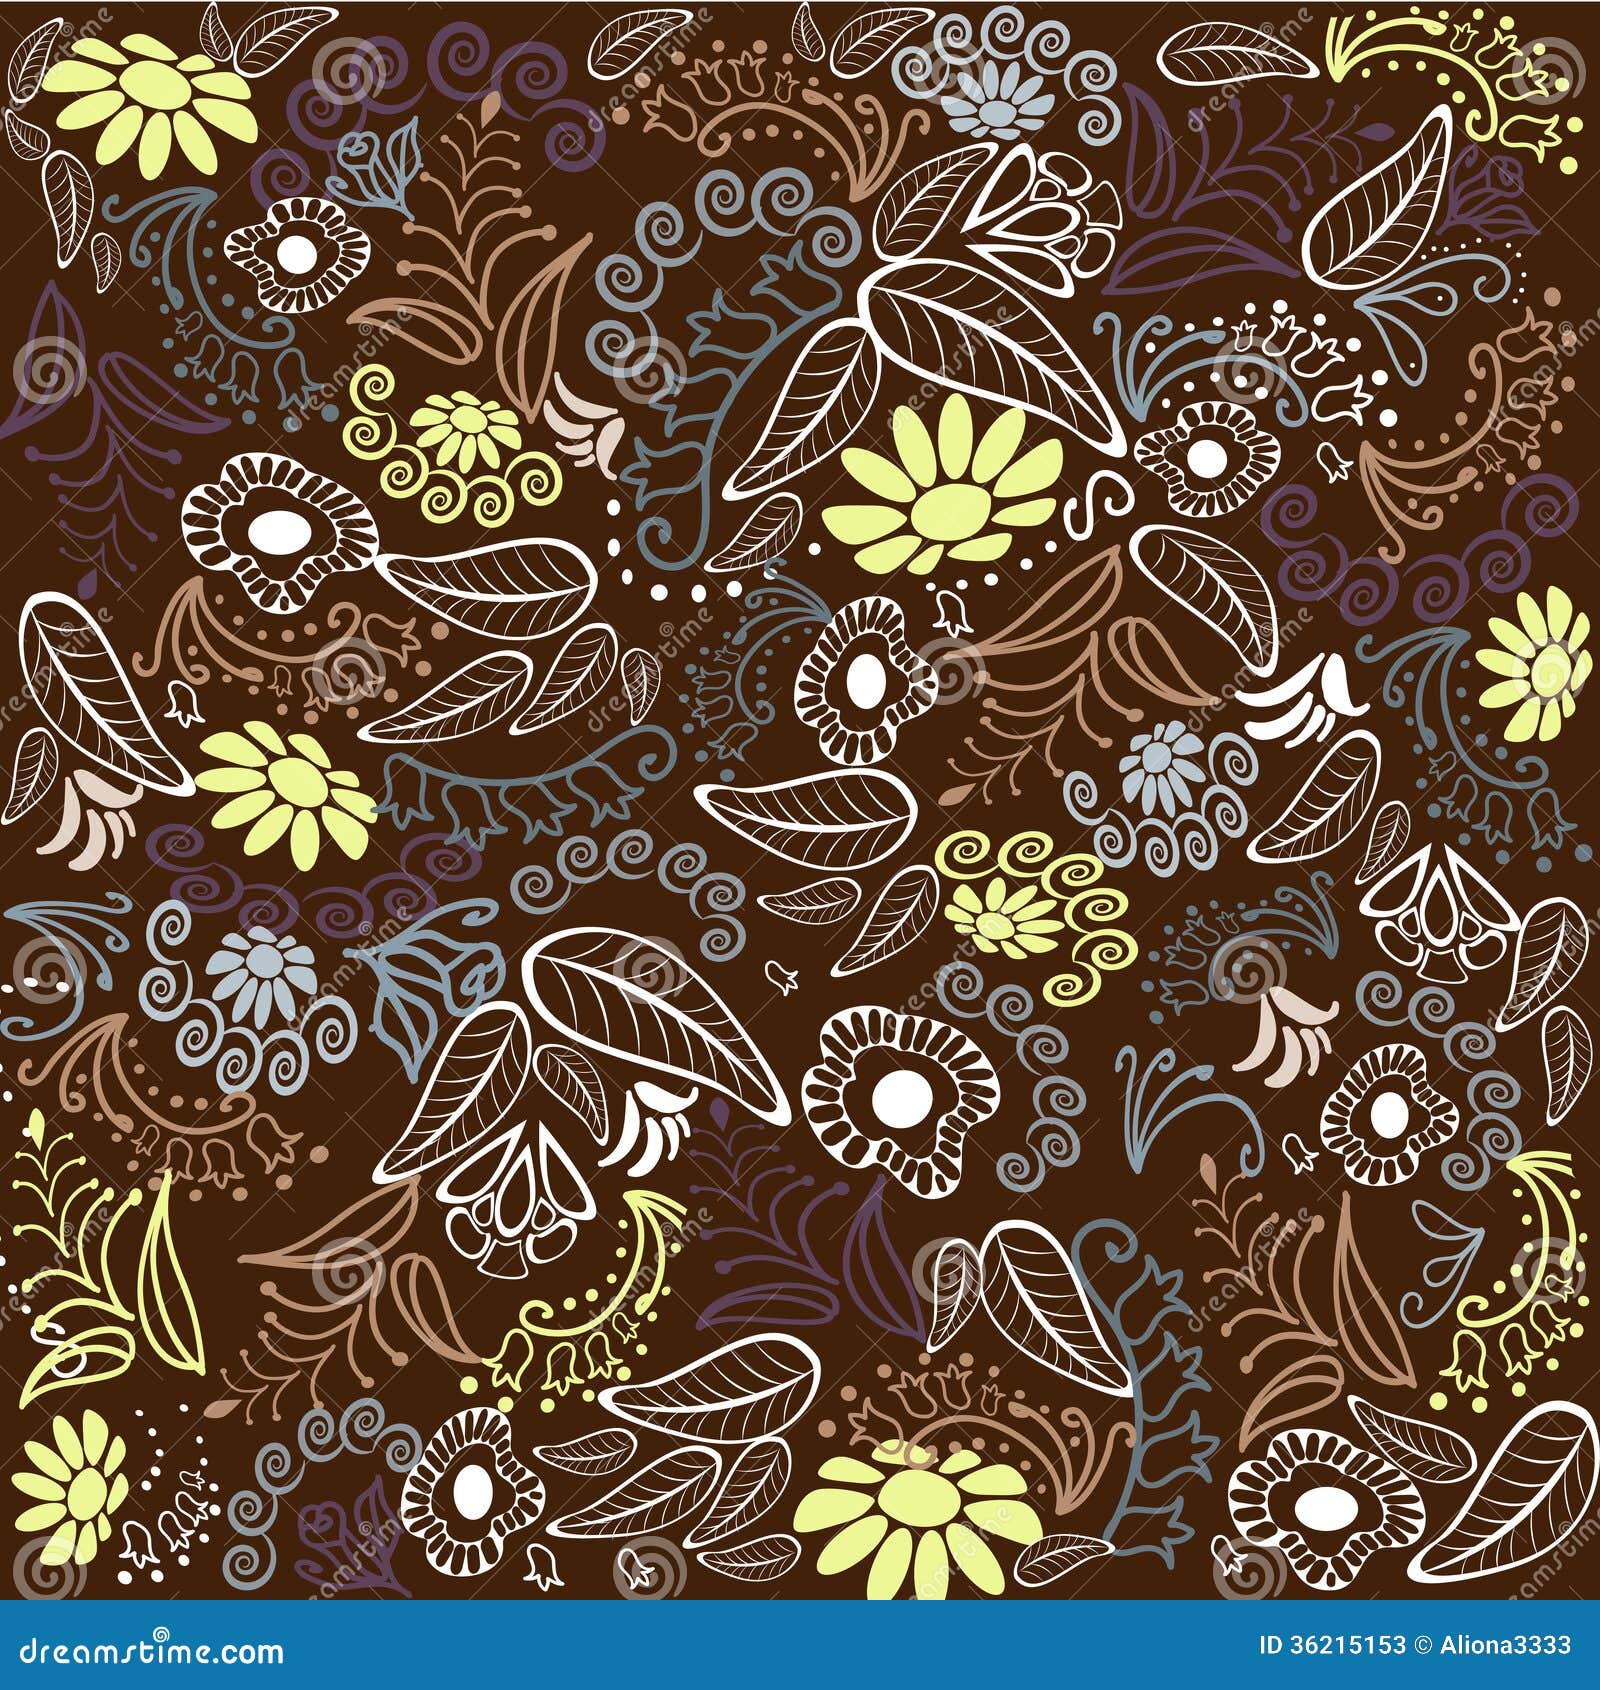 Brown flower pattern stock vector. Illustration of brown - 36215153